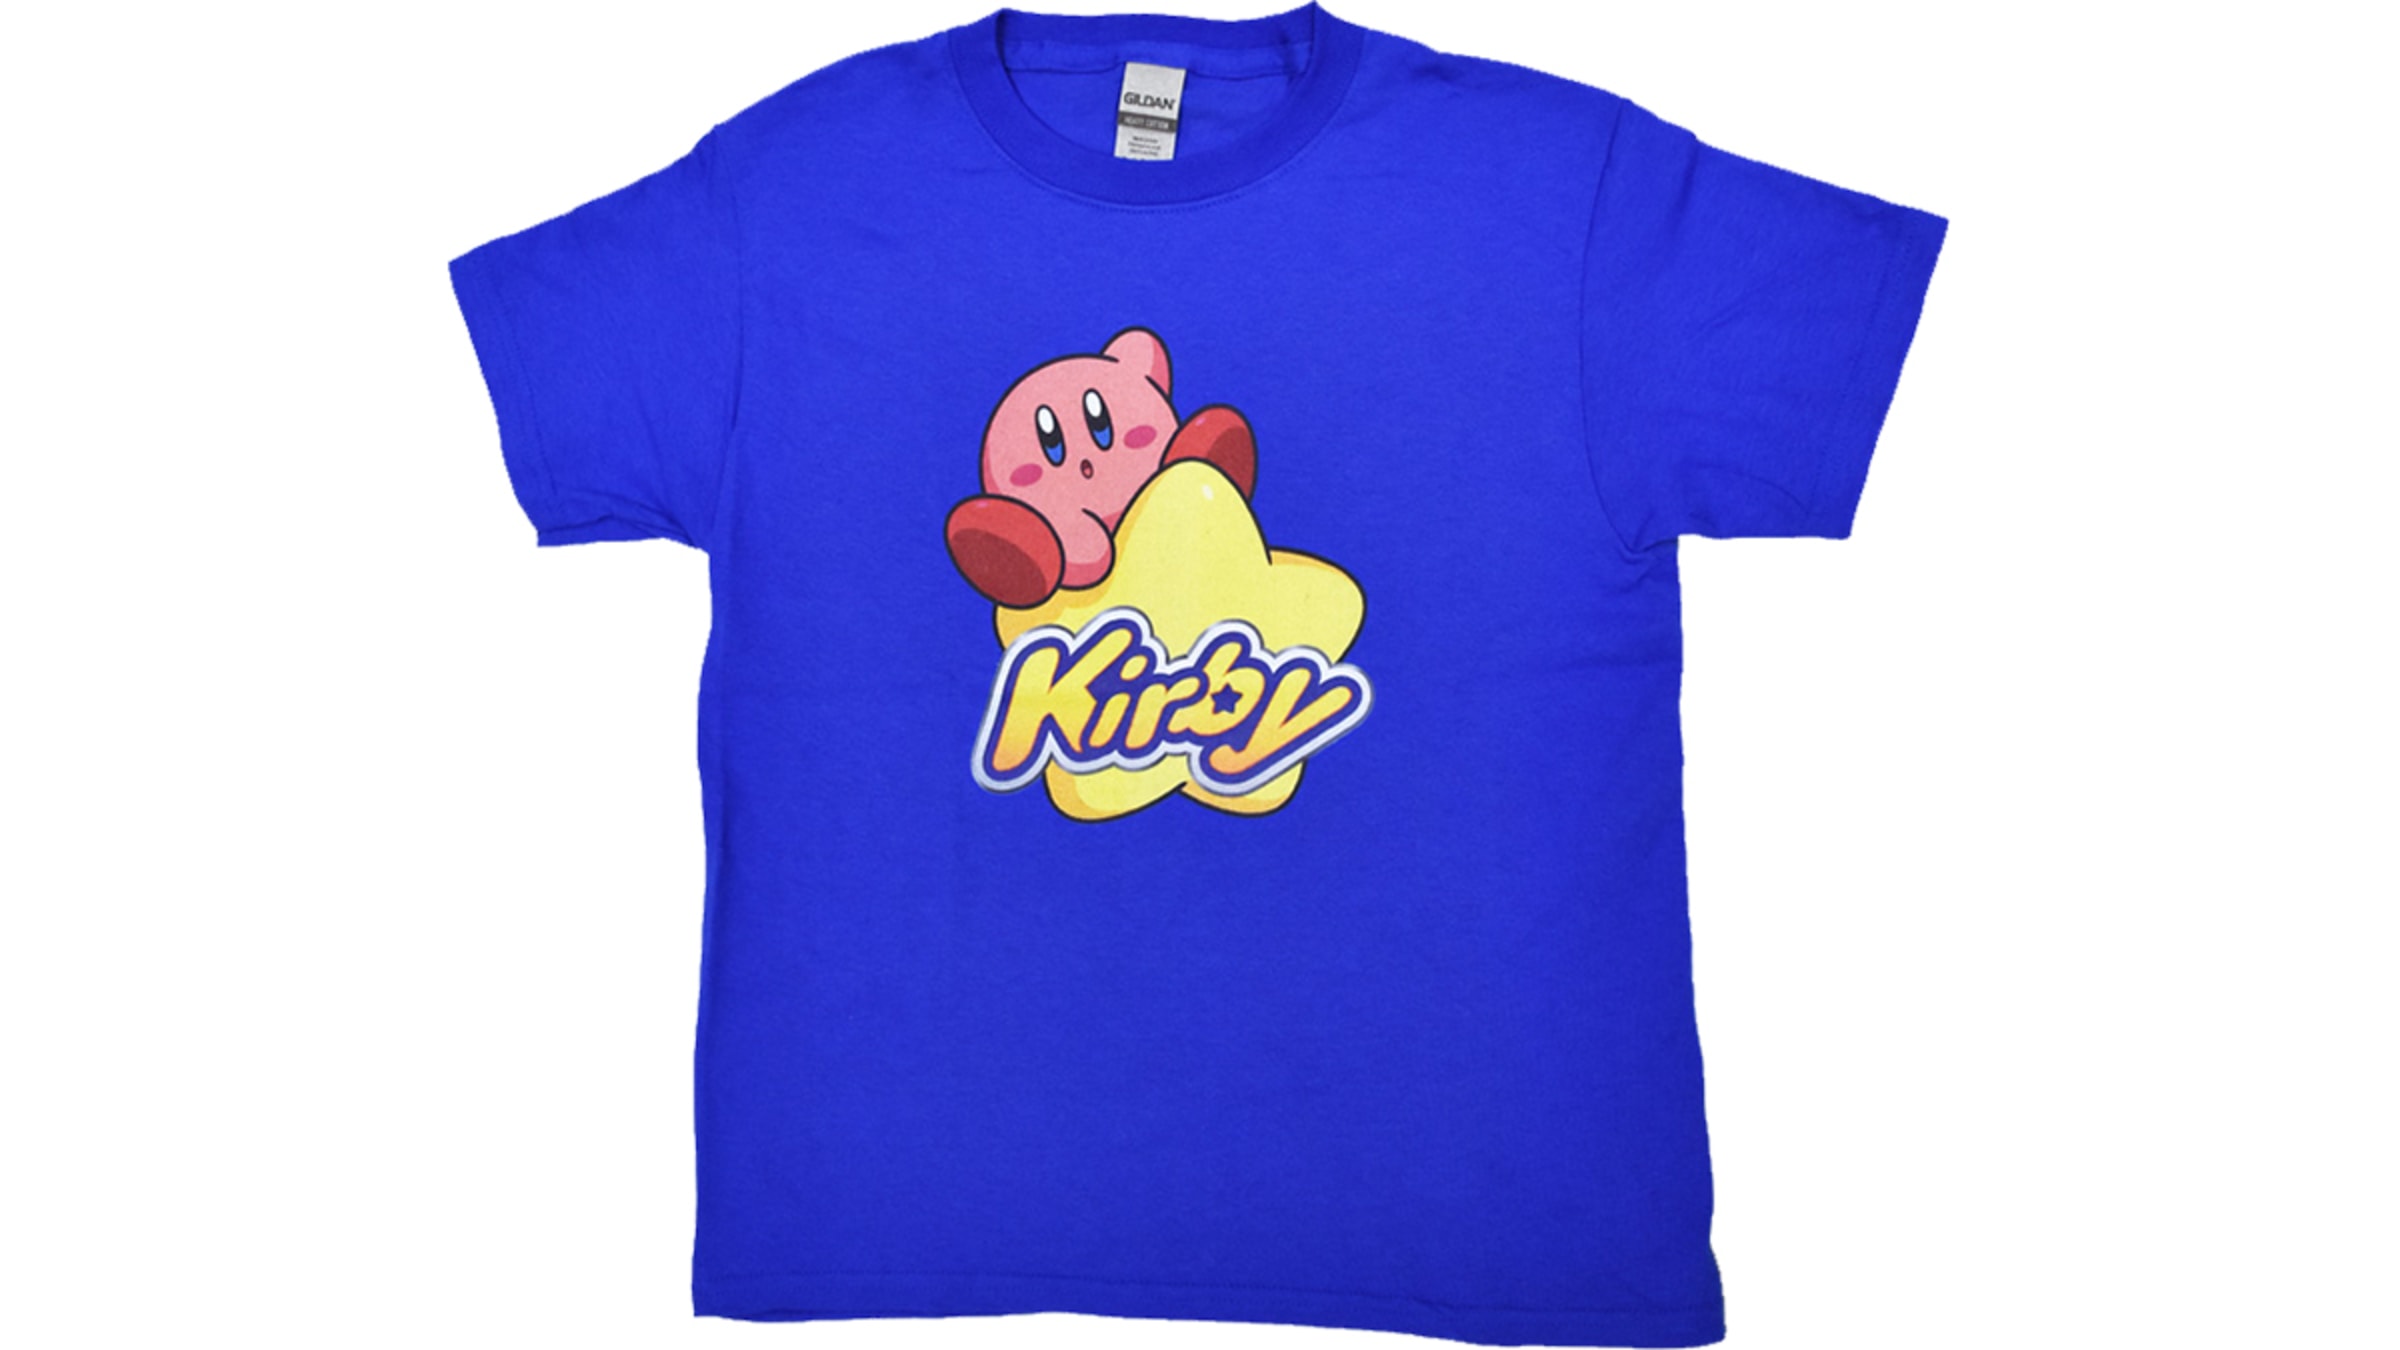 aanpassen Verbetering Meetbaar Blue Boy's Kirby Star T-Shirt - Merchandise - Nintendo Official Site